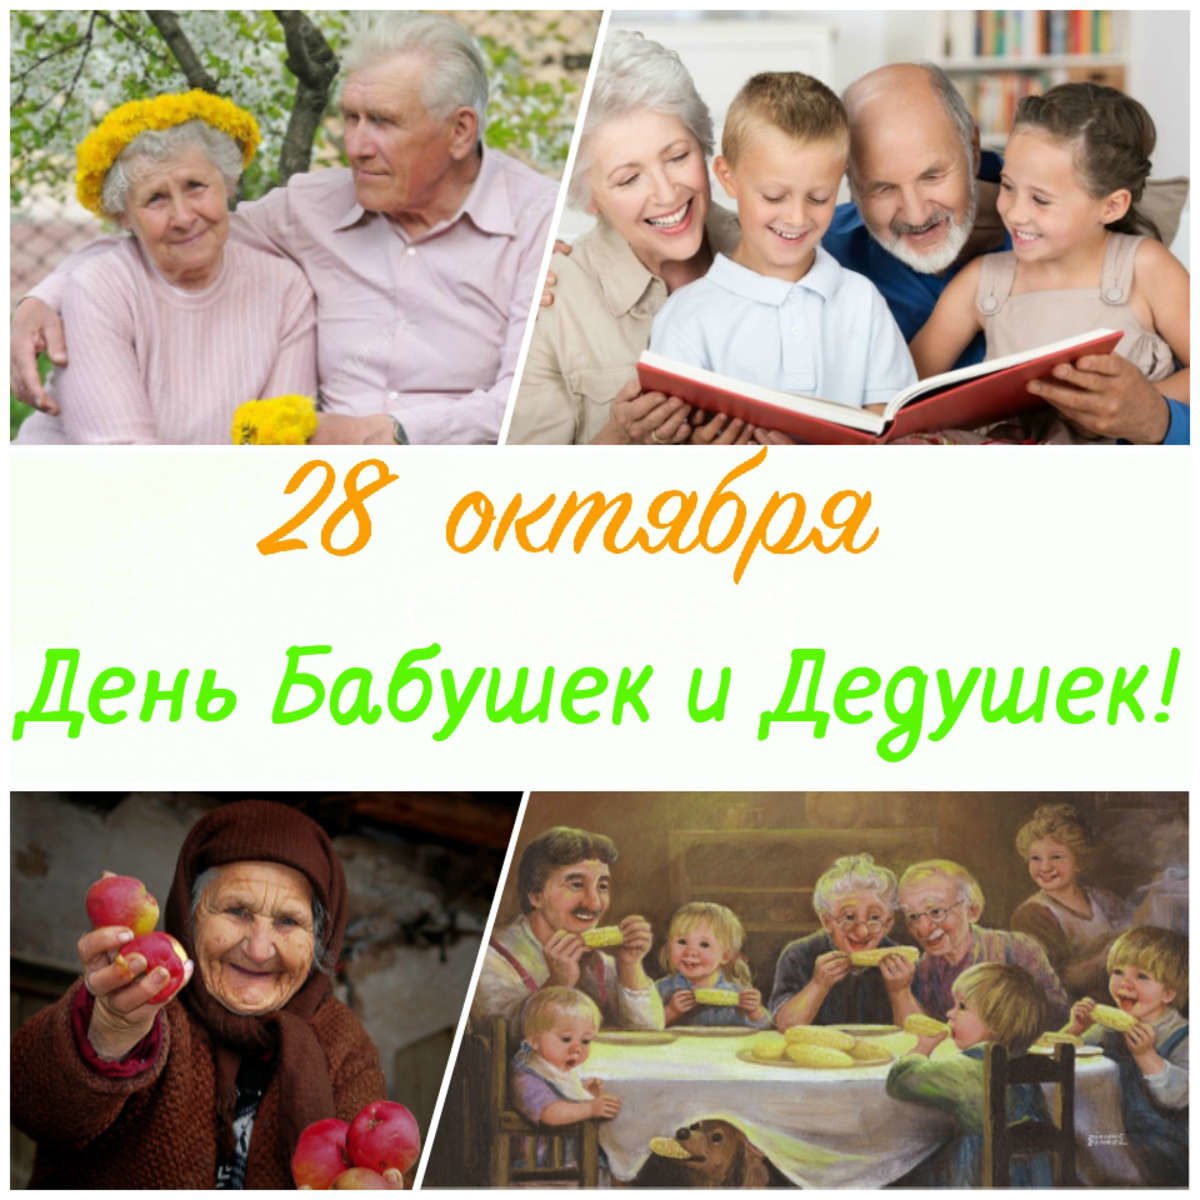 День бабушек и дедушек в России. С днём бабушек и дедушек. 28 Октября – день бабушек и дедуше. Поздравление бабушек и дедушек.